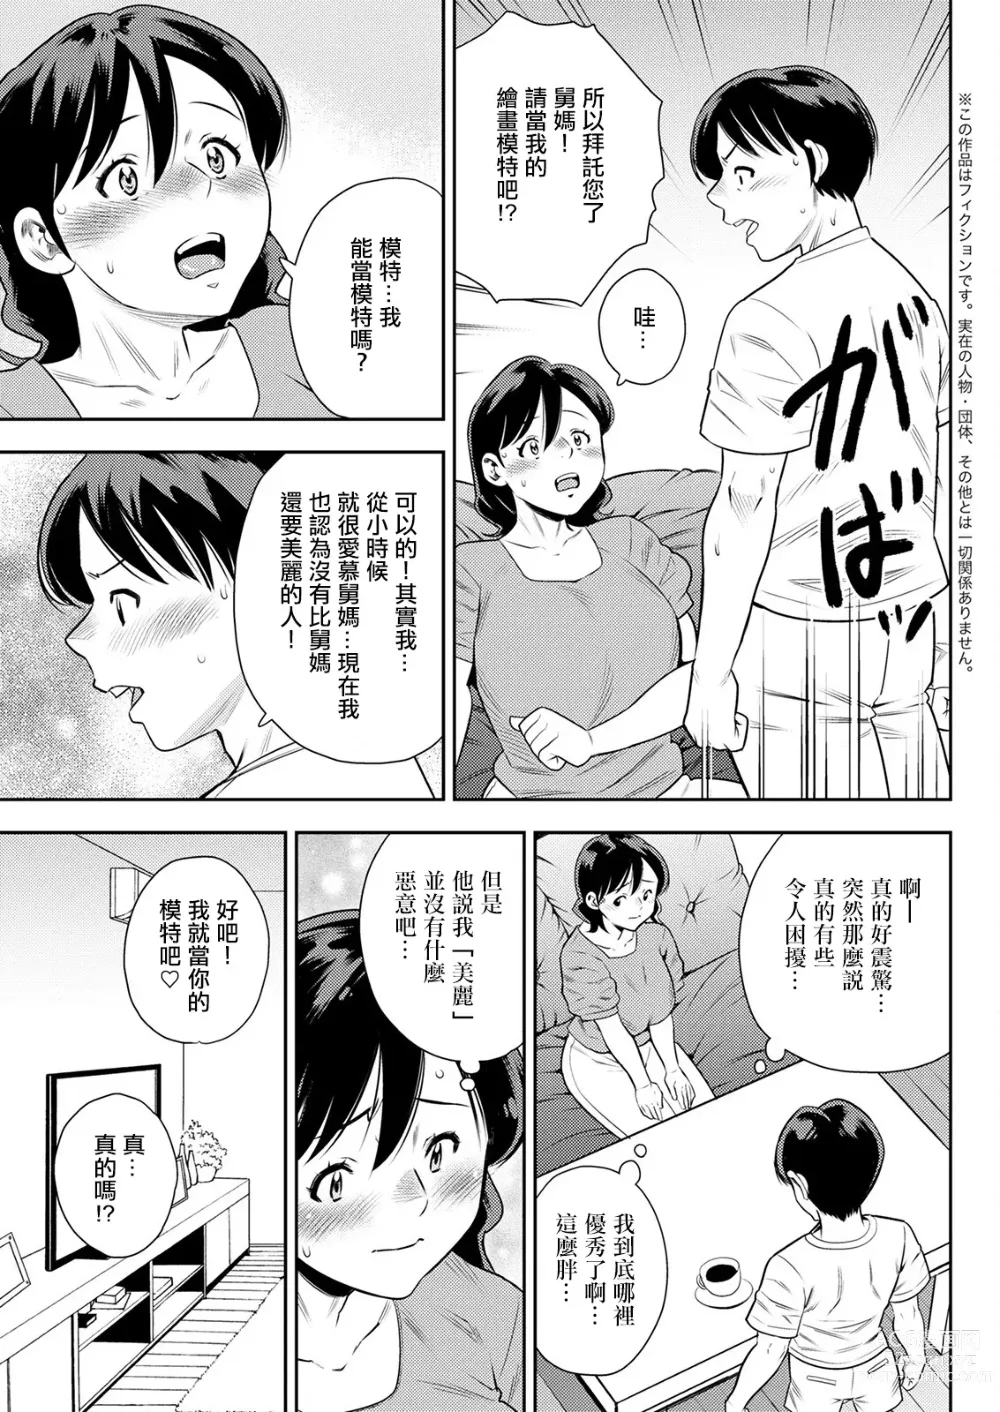 Page 3 of manga Iiwake